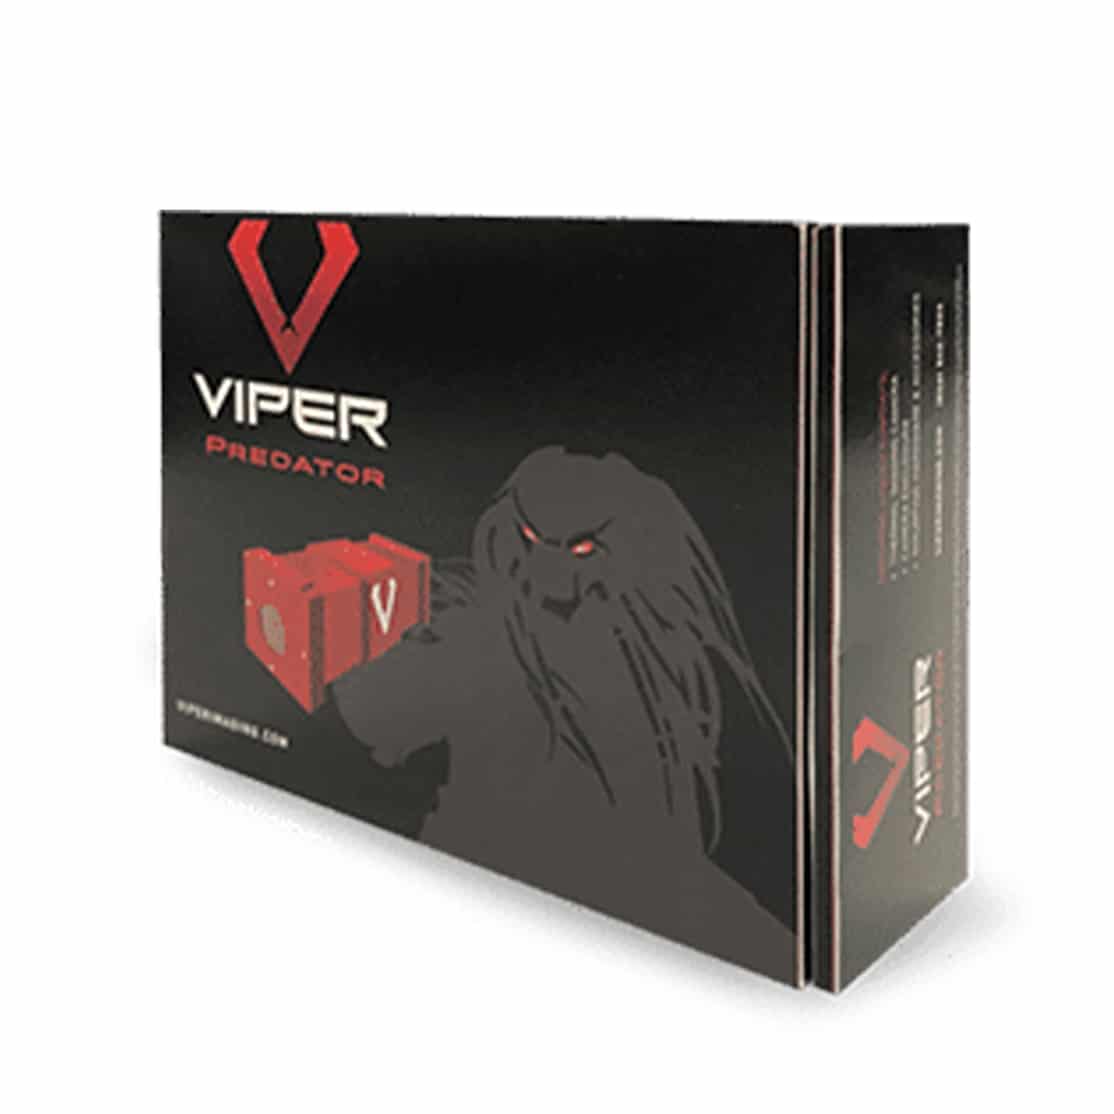 Viper Predator monitoring system box